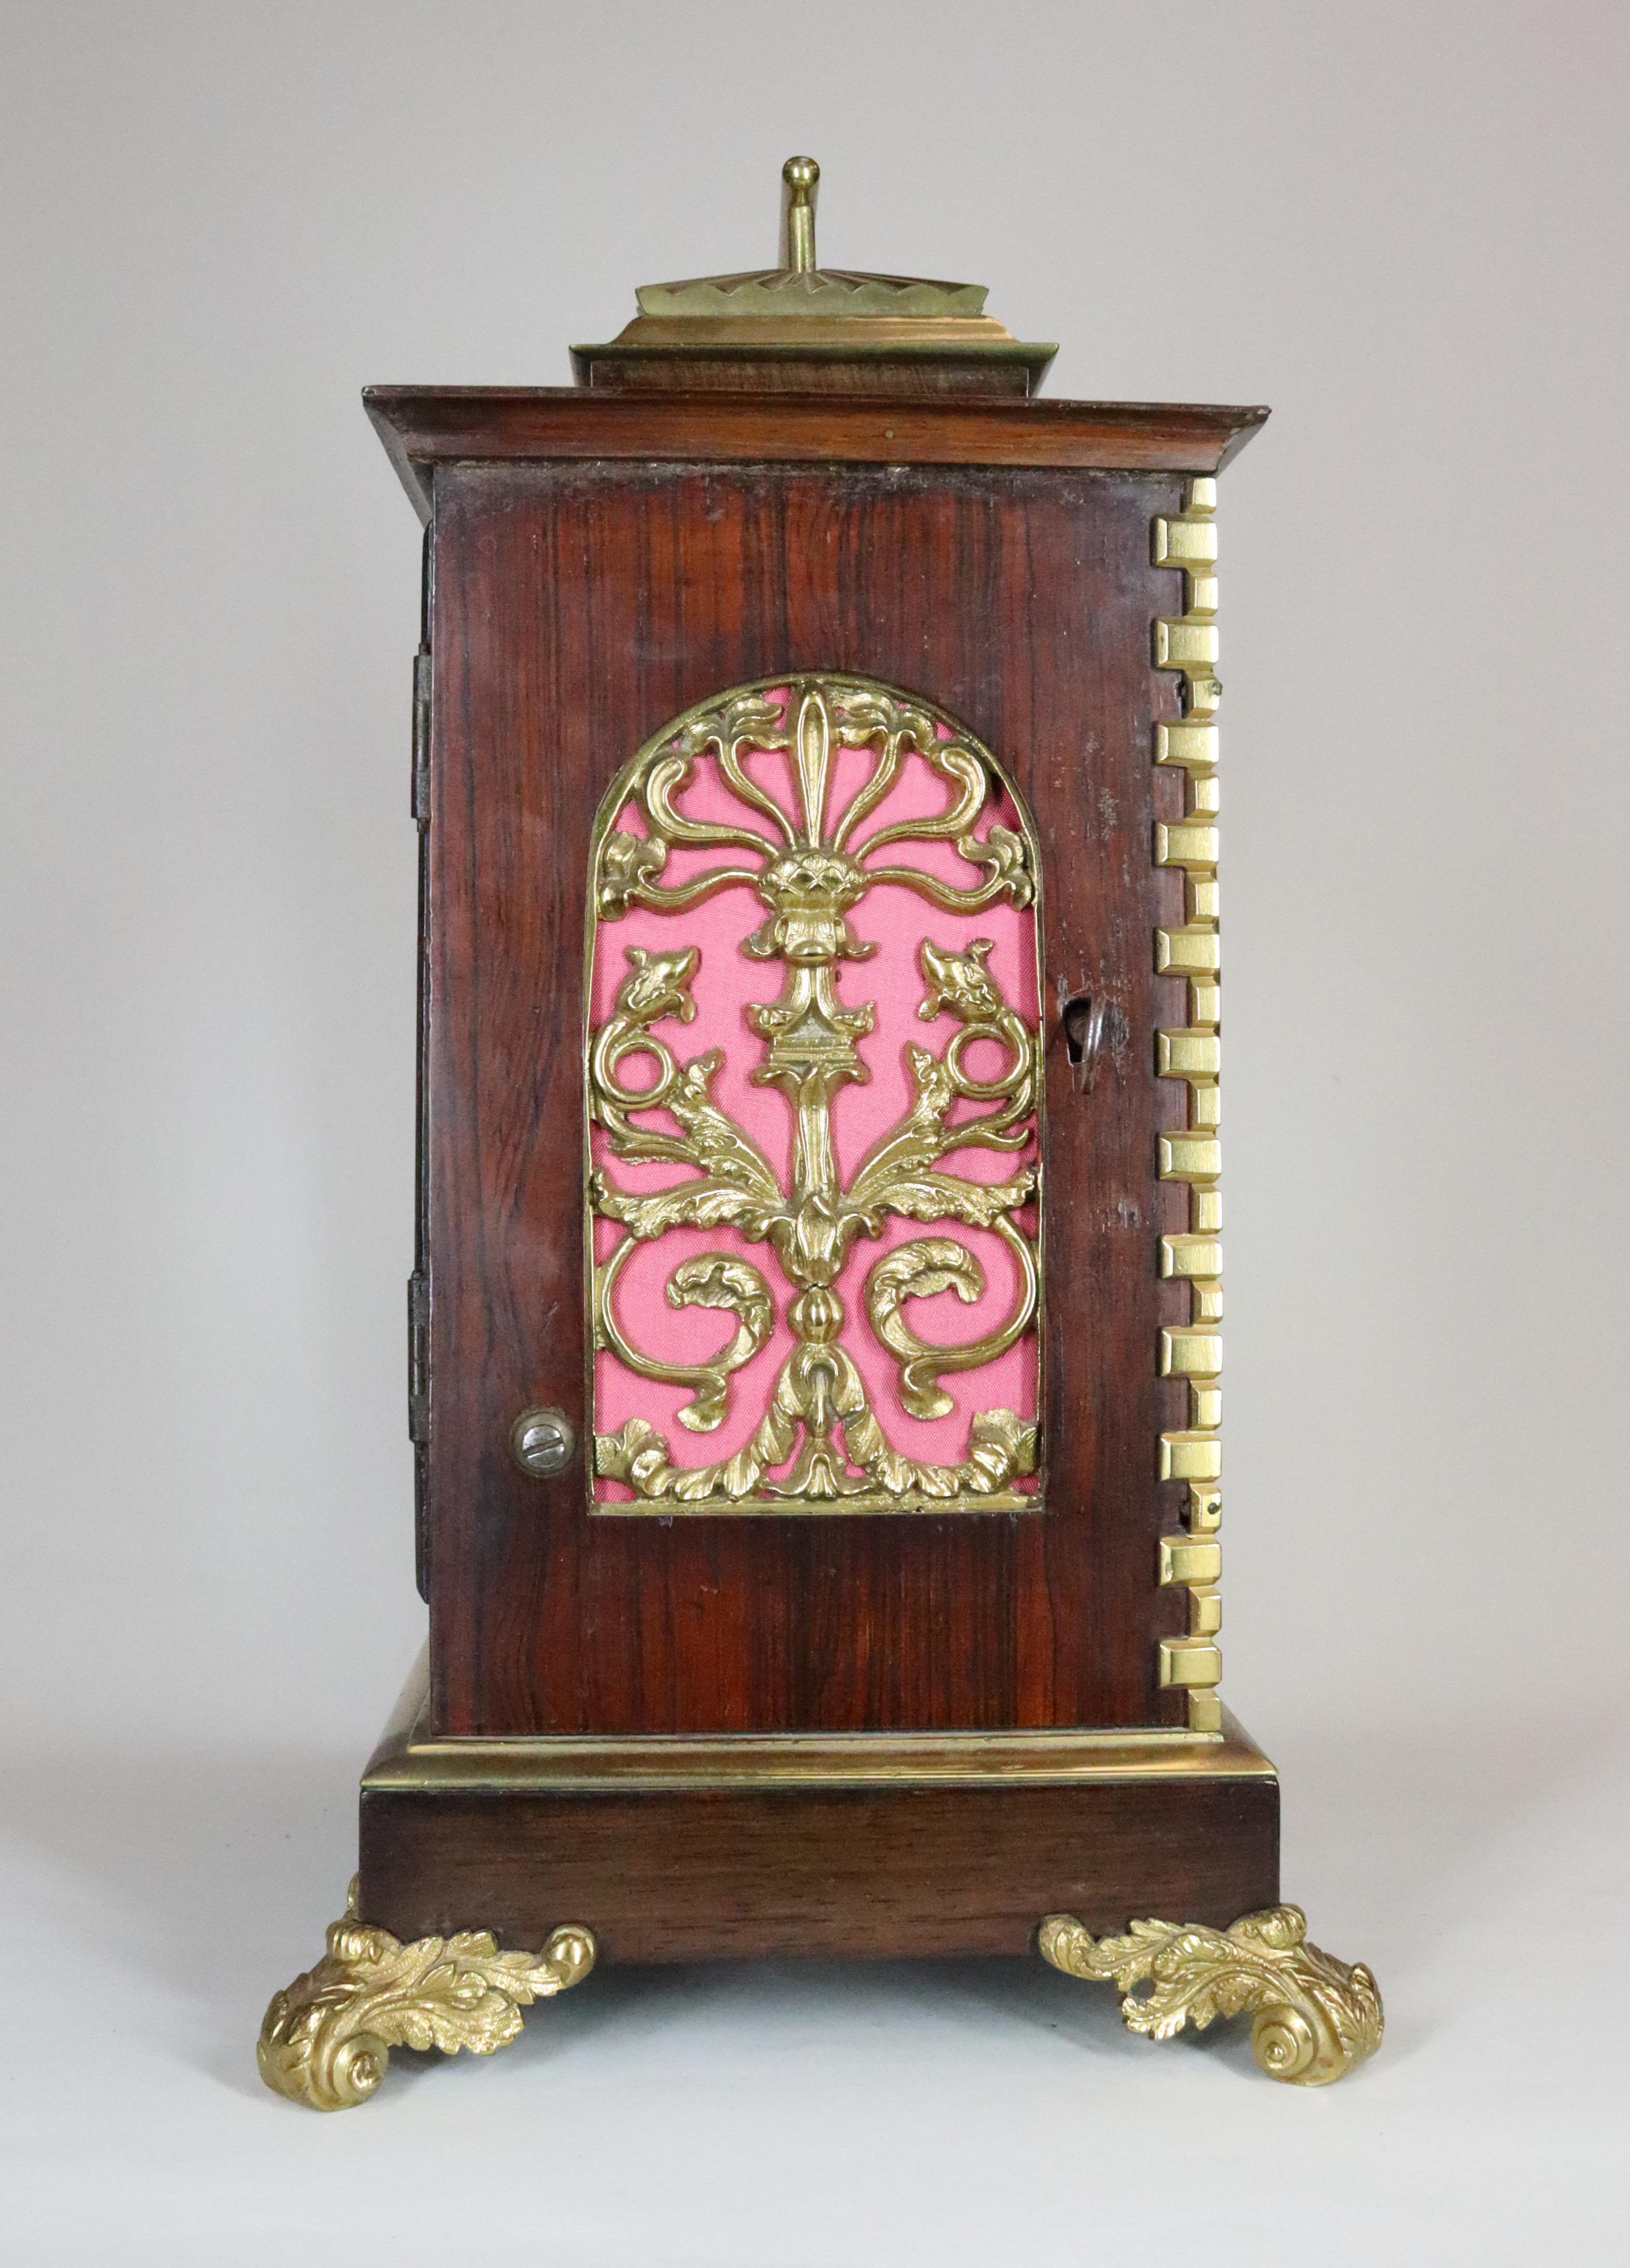 19th Century A Diminutive Bracket Clock by Adams of Lombard Street For Sale